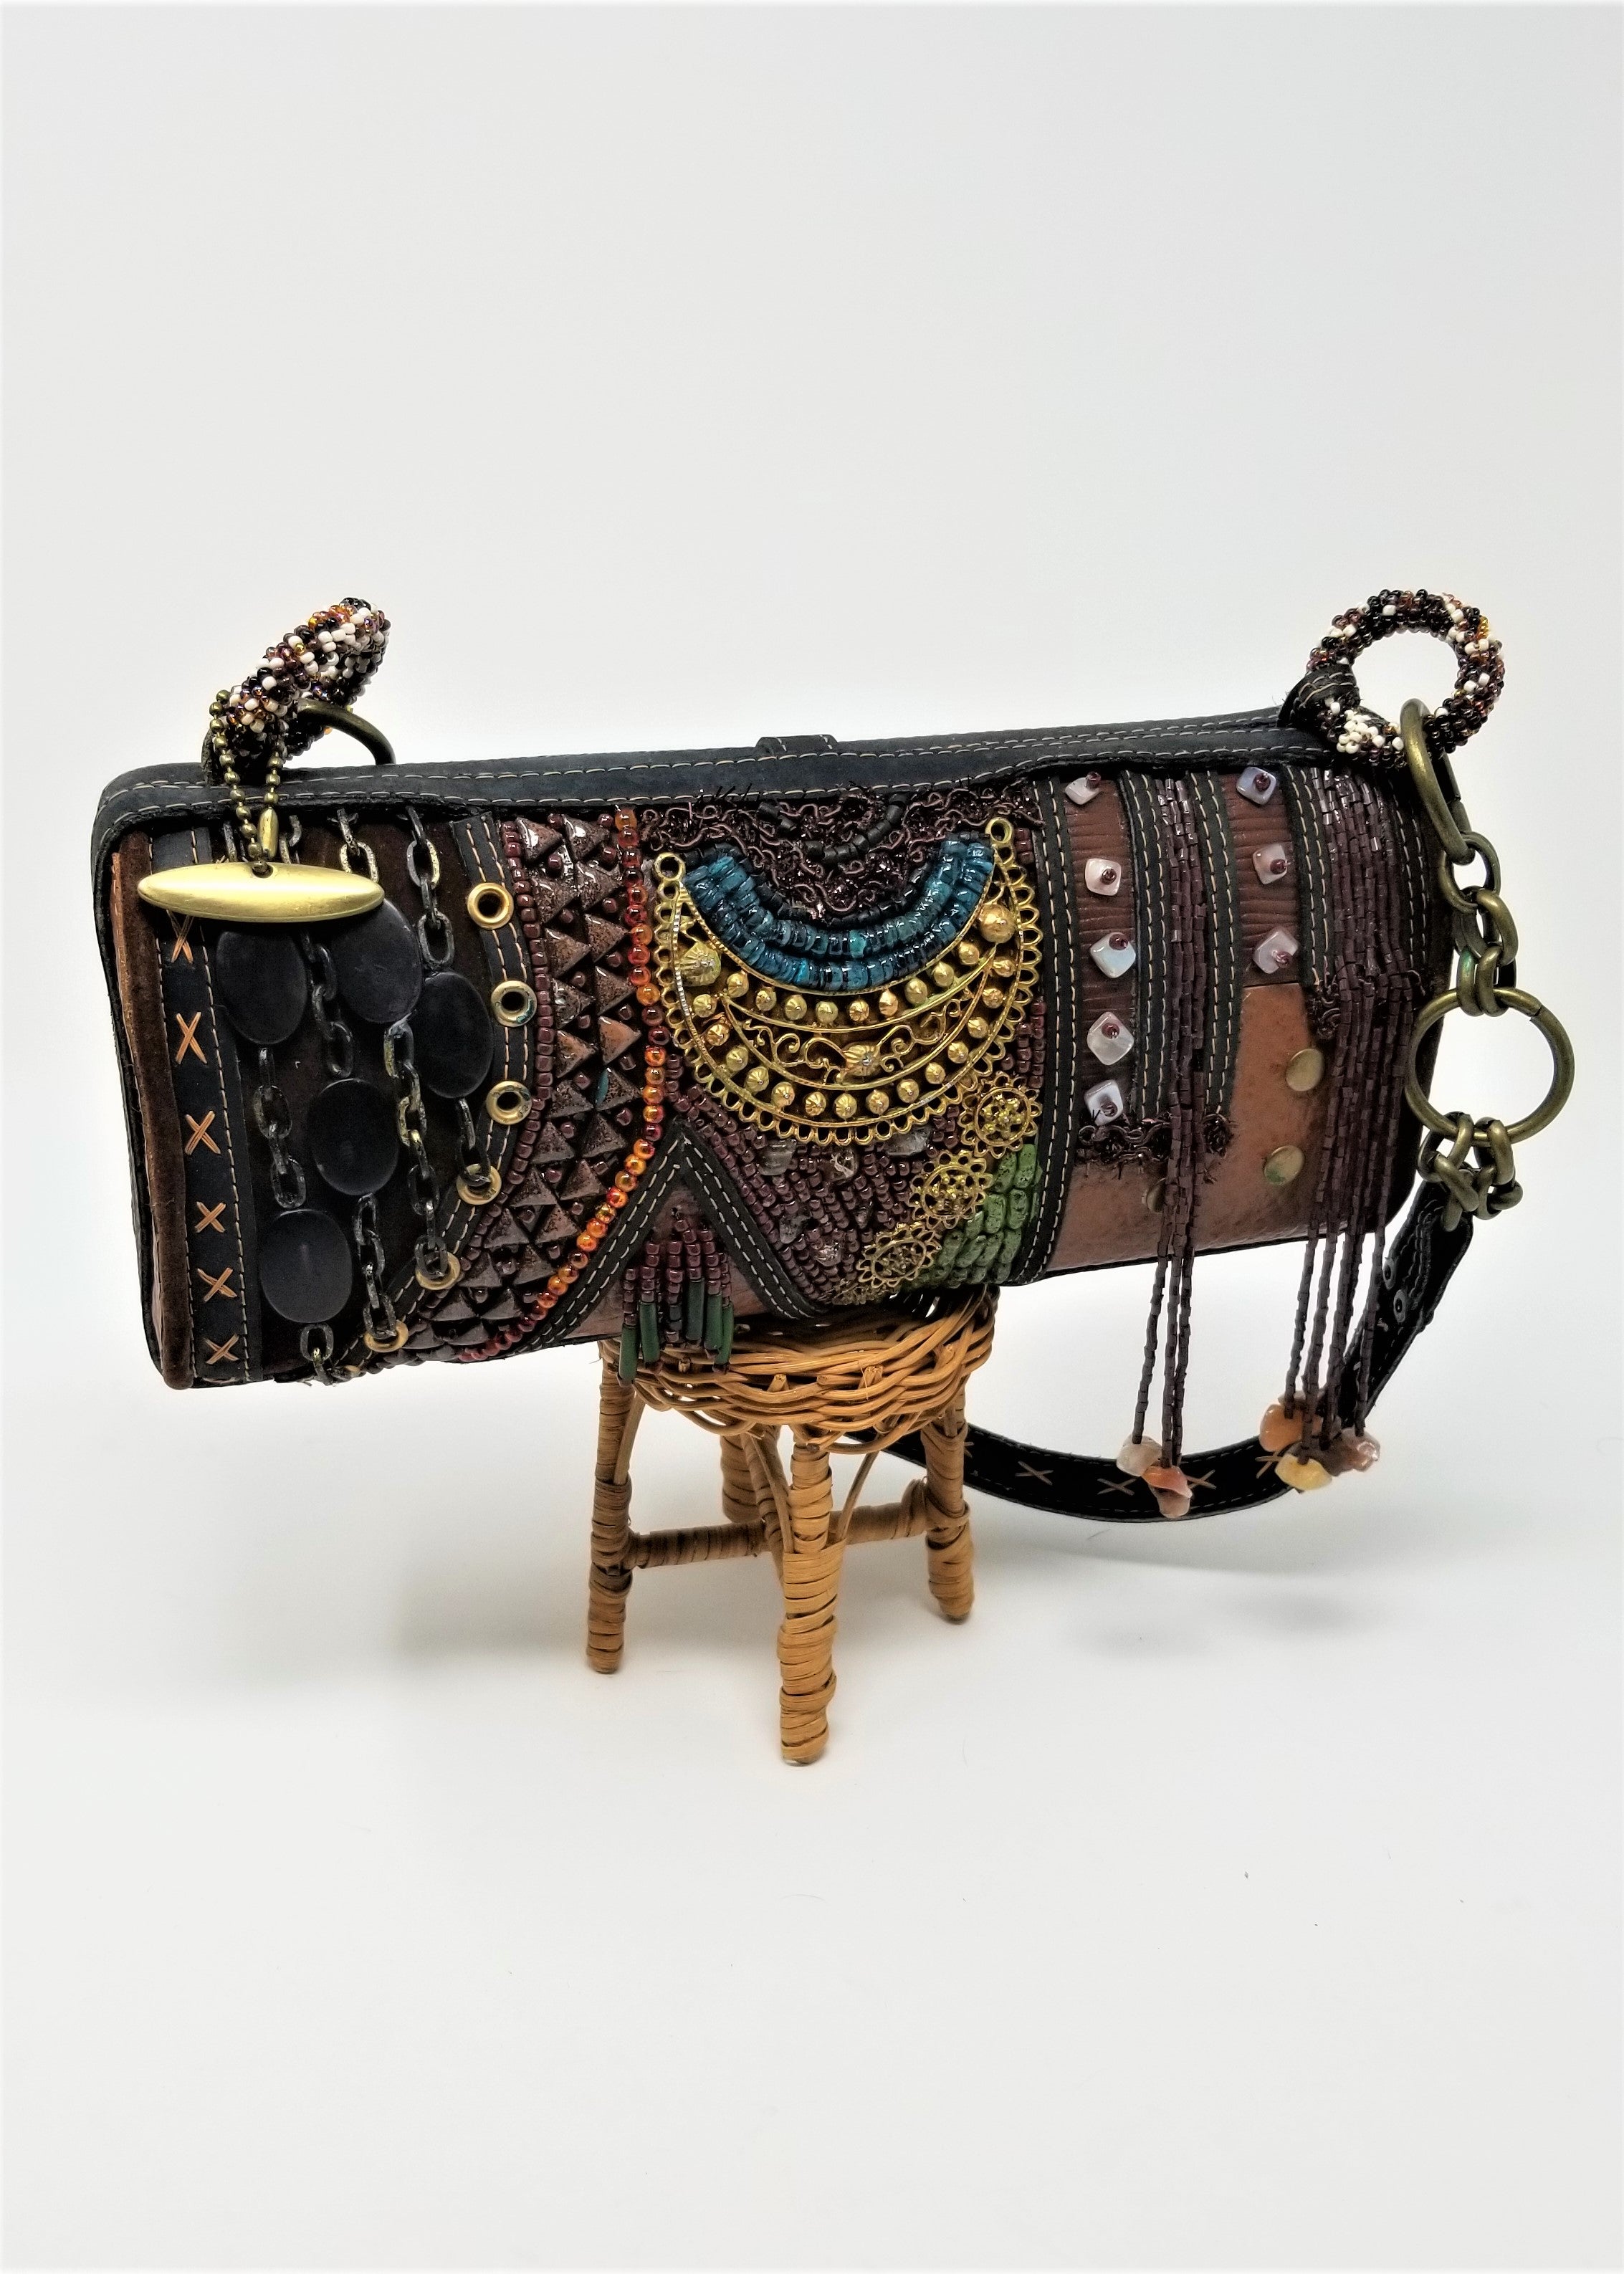 Mary Frances Handbag Browns, Golds, Bronze Beads & Tassels Purse